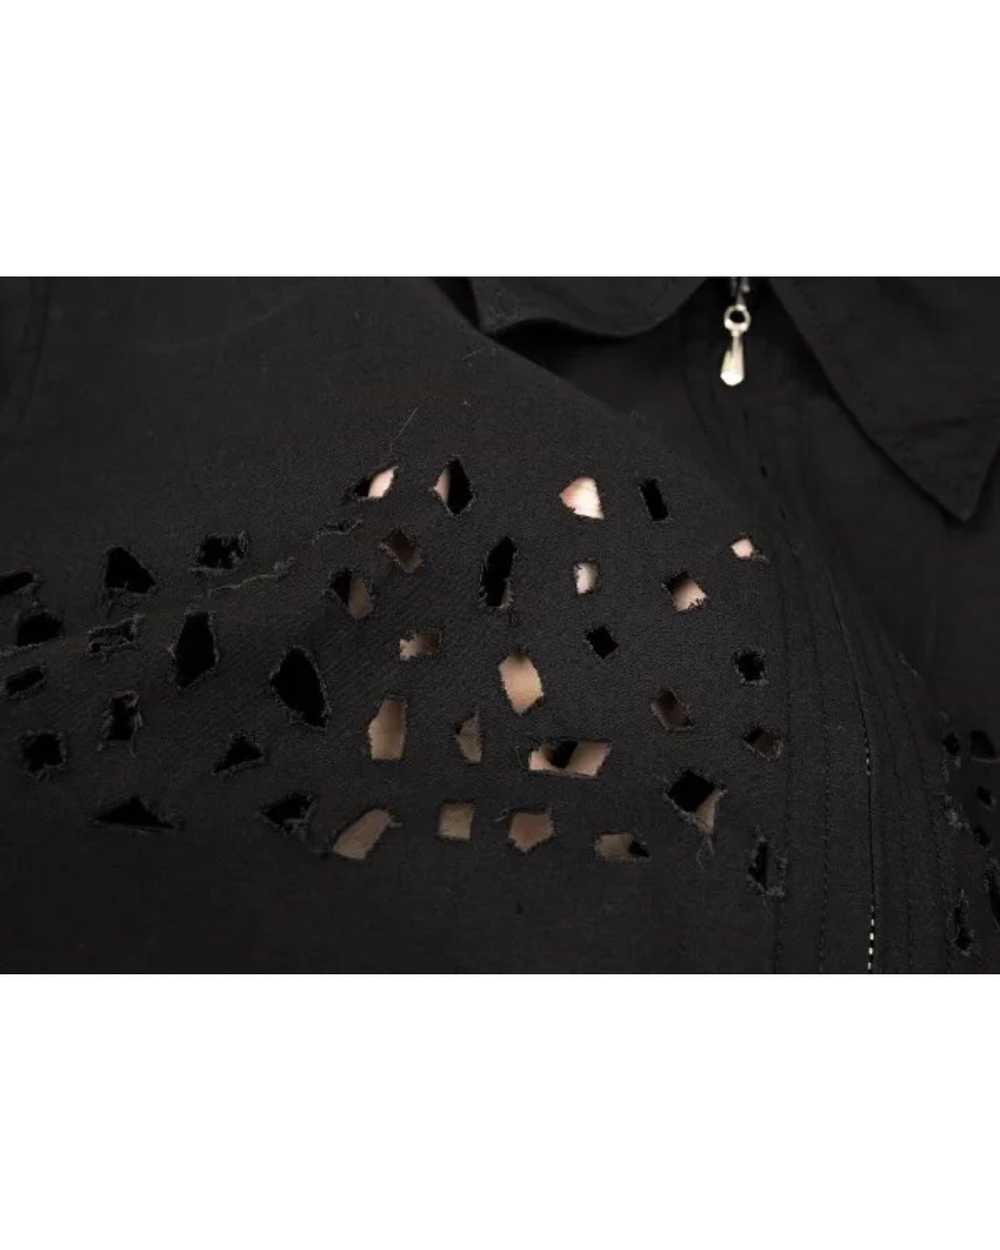 Jean Paul Gaultier Laser-Cut Zip-Up Shirt - image 6